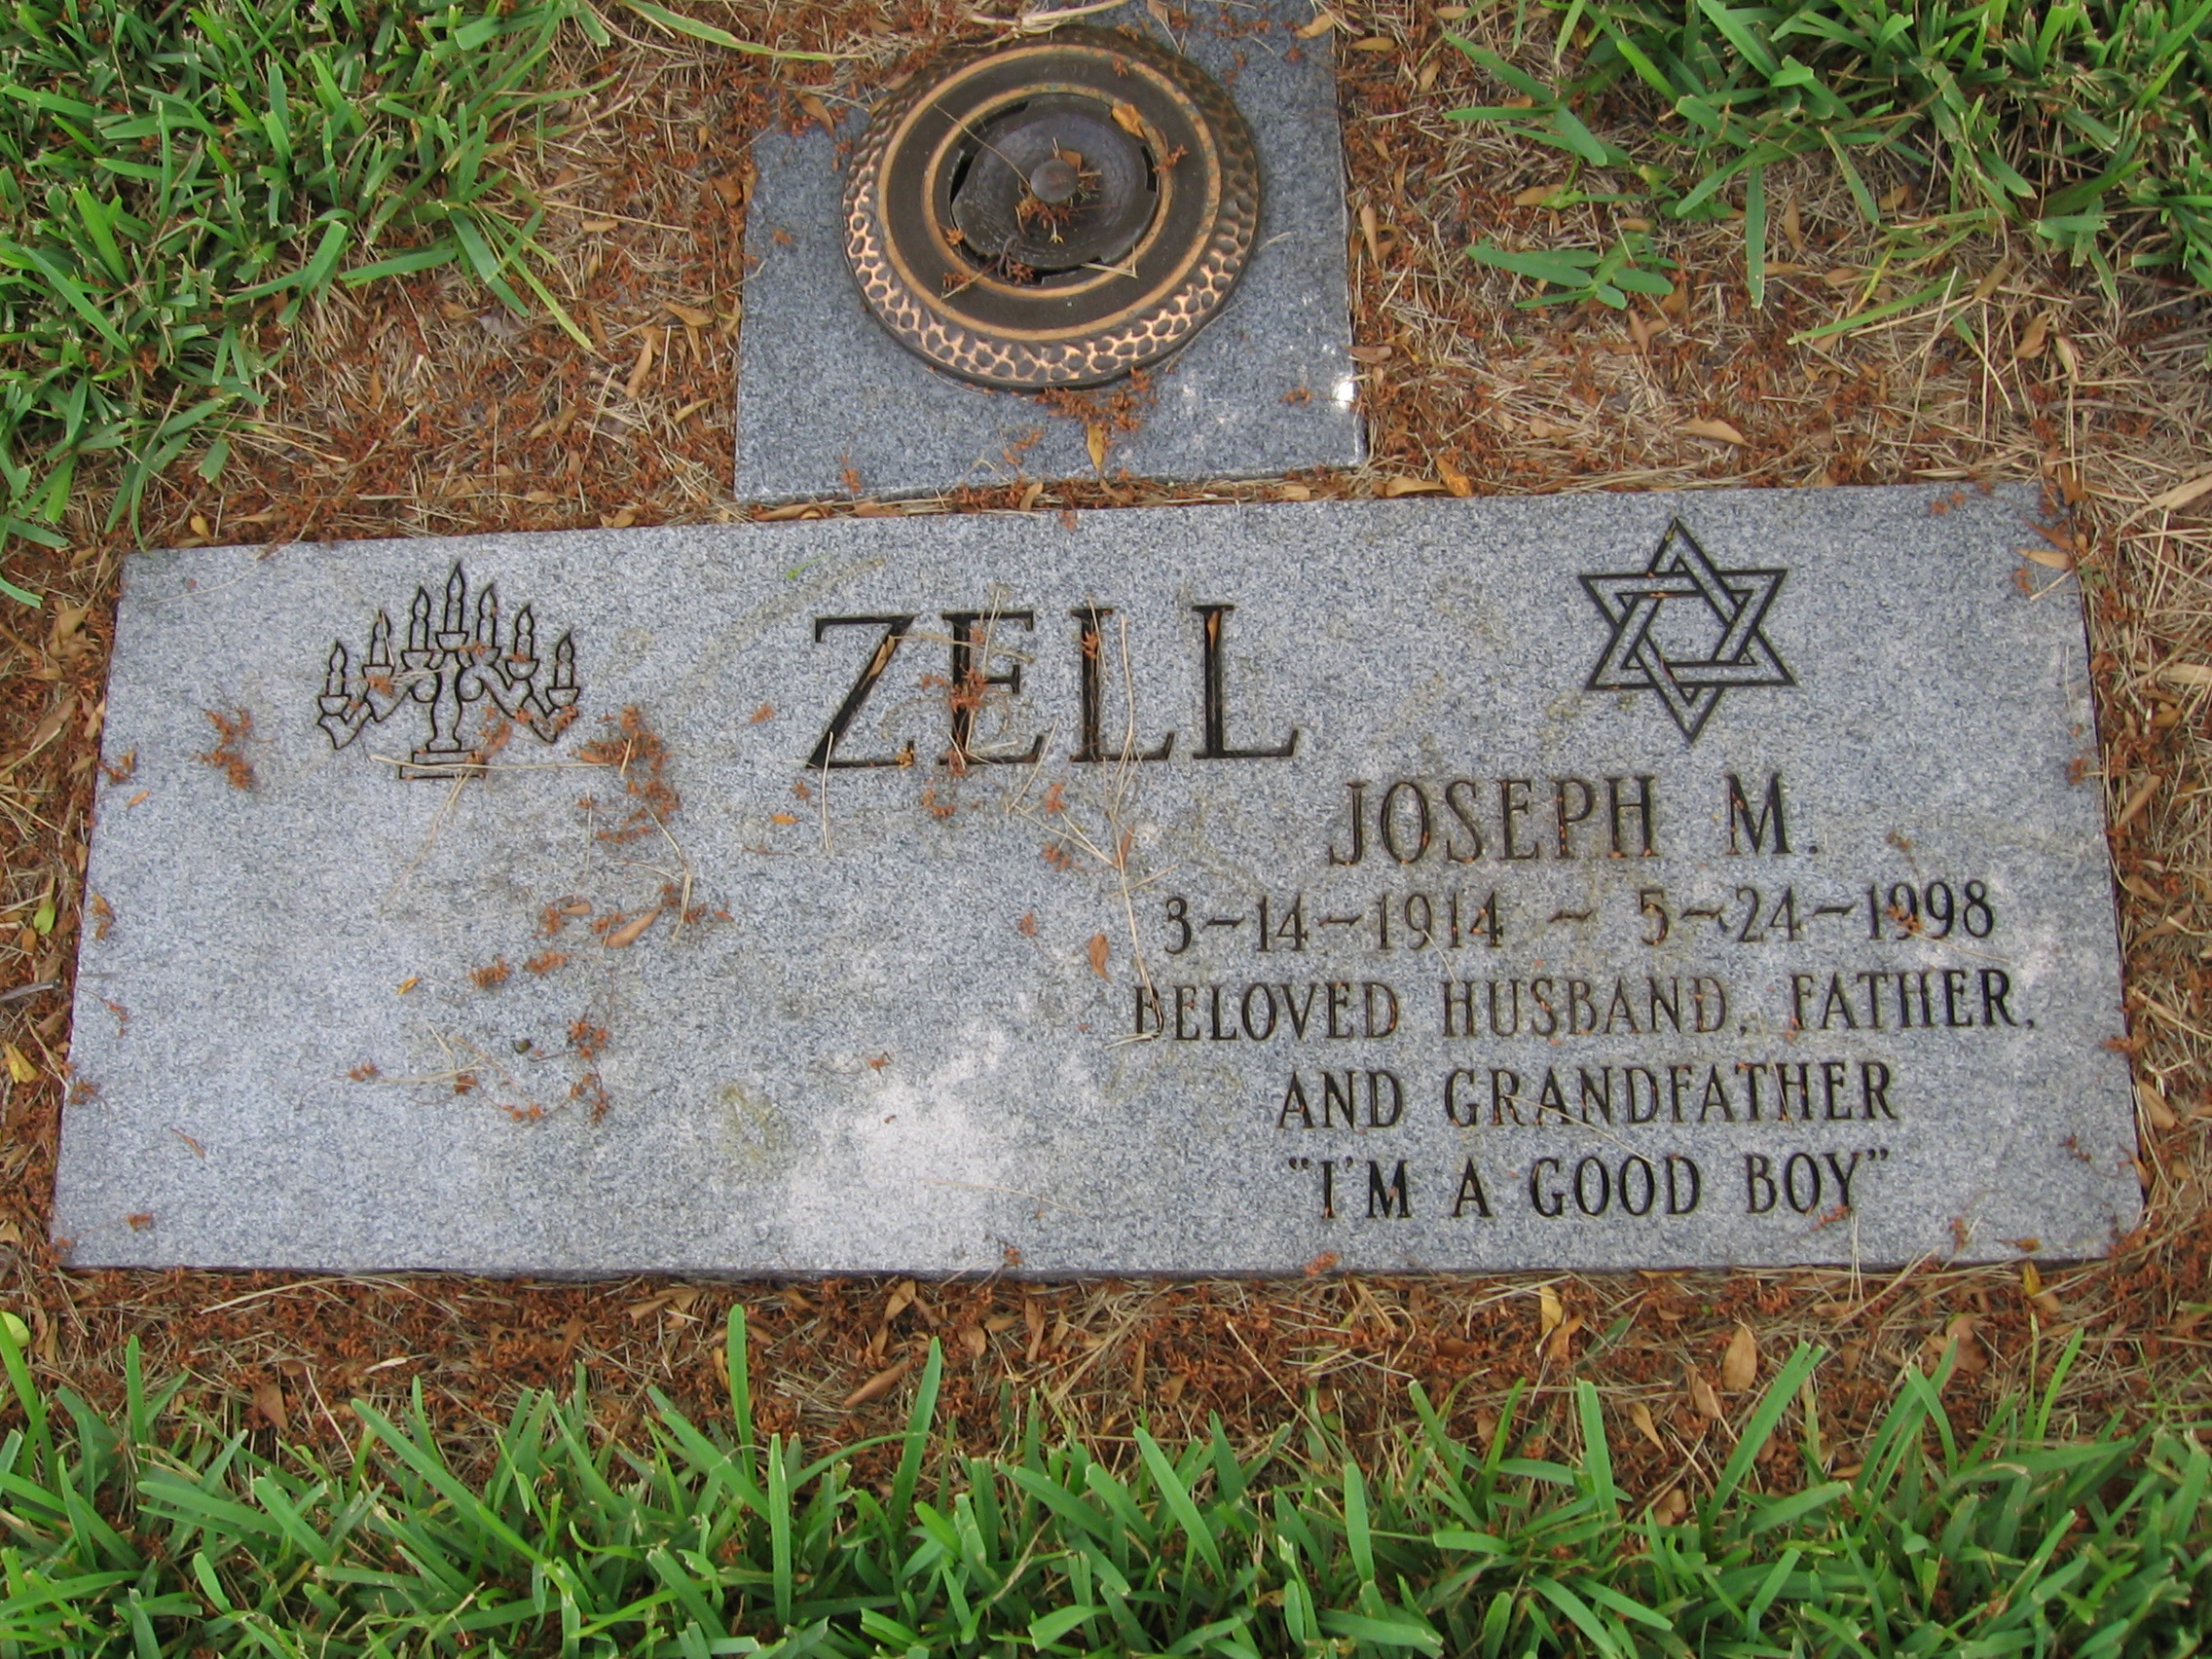 Joseph M Zell